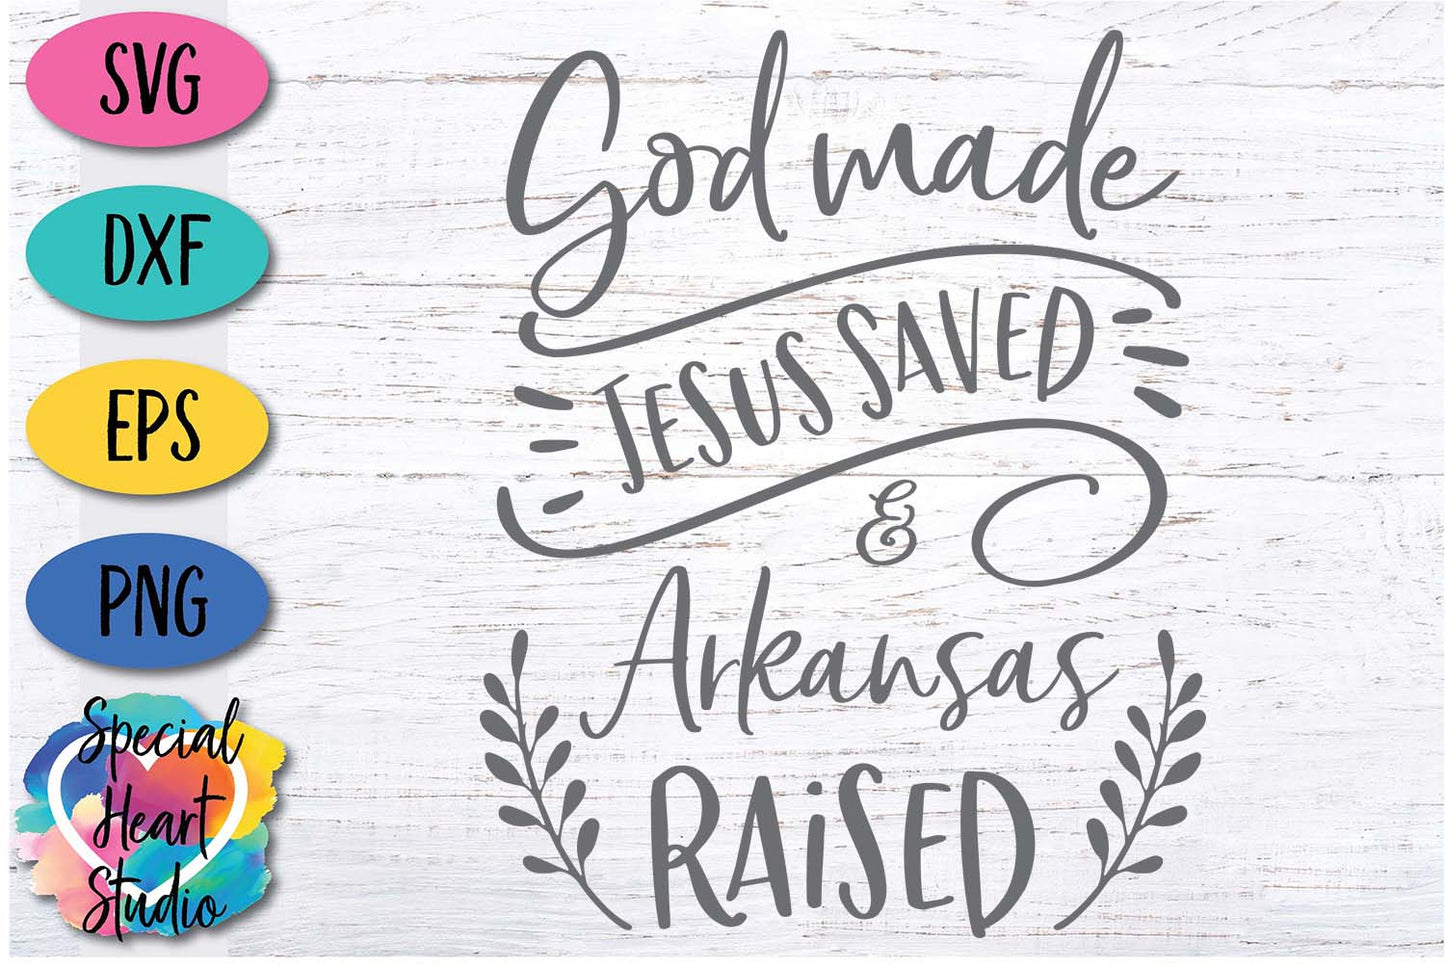 God Made, Jesus Saved and Arkansas Raised